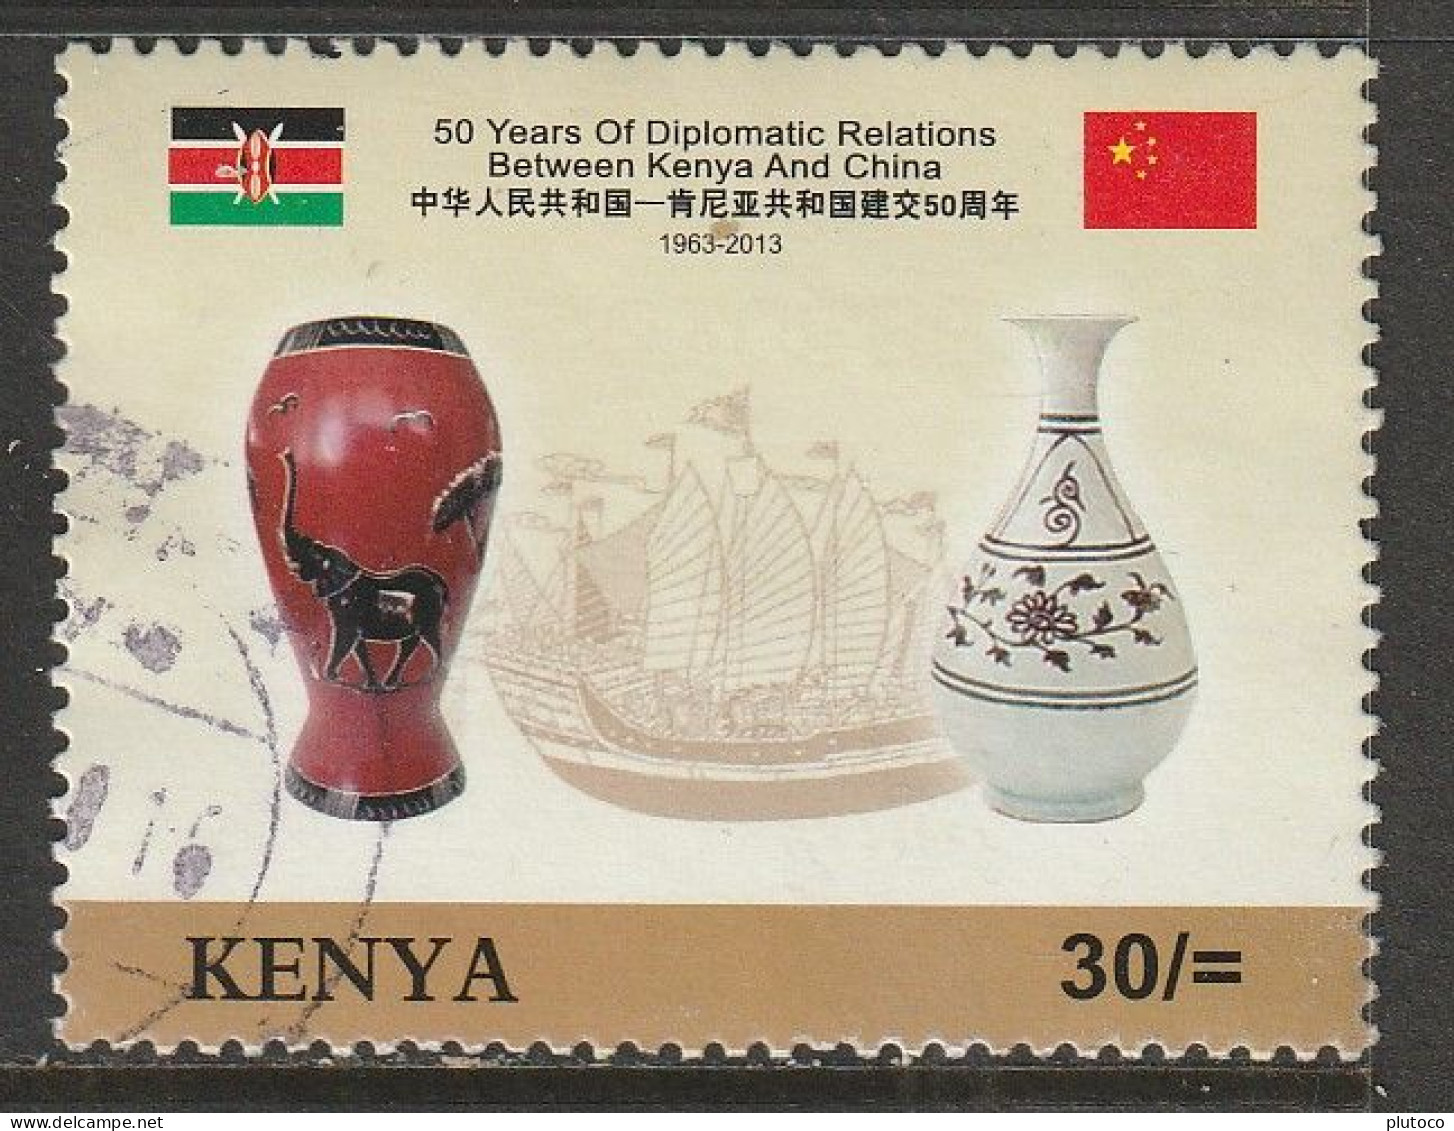 KENYA, USED STAMP, OBLITERÉ, SELLO USADO - Kenya (1963-...)